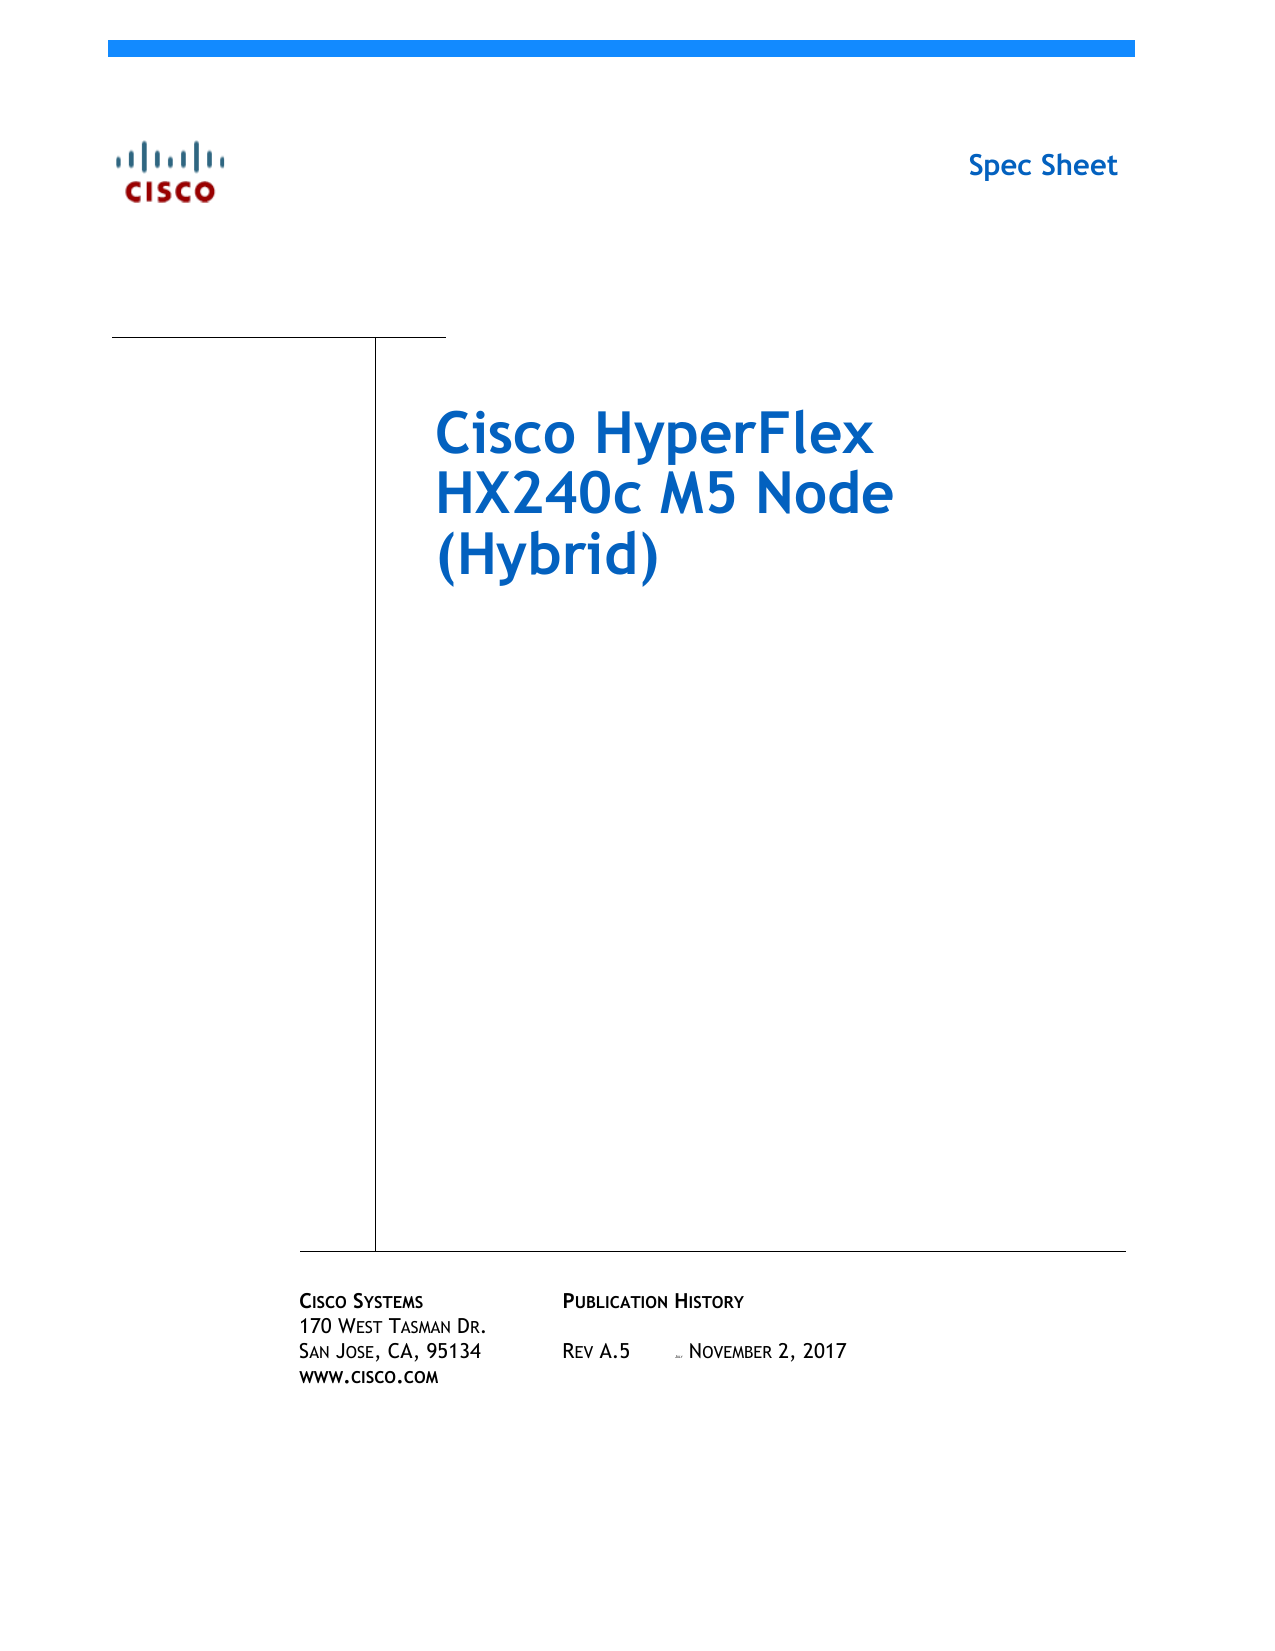 Cisco Hyperflex Hx240c M5 Node Spec Sheet Manualzz